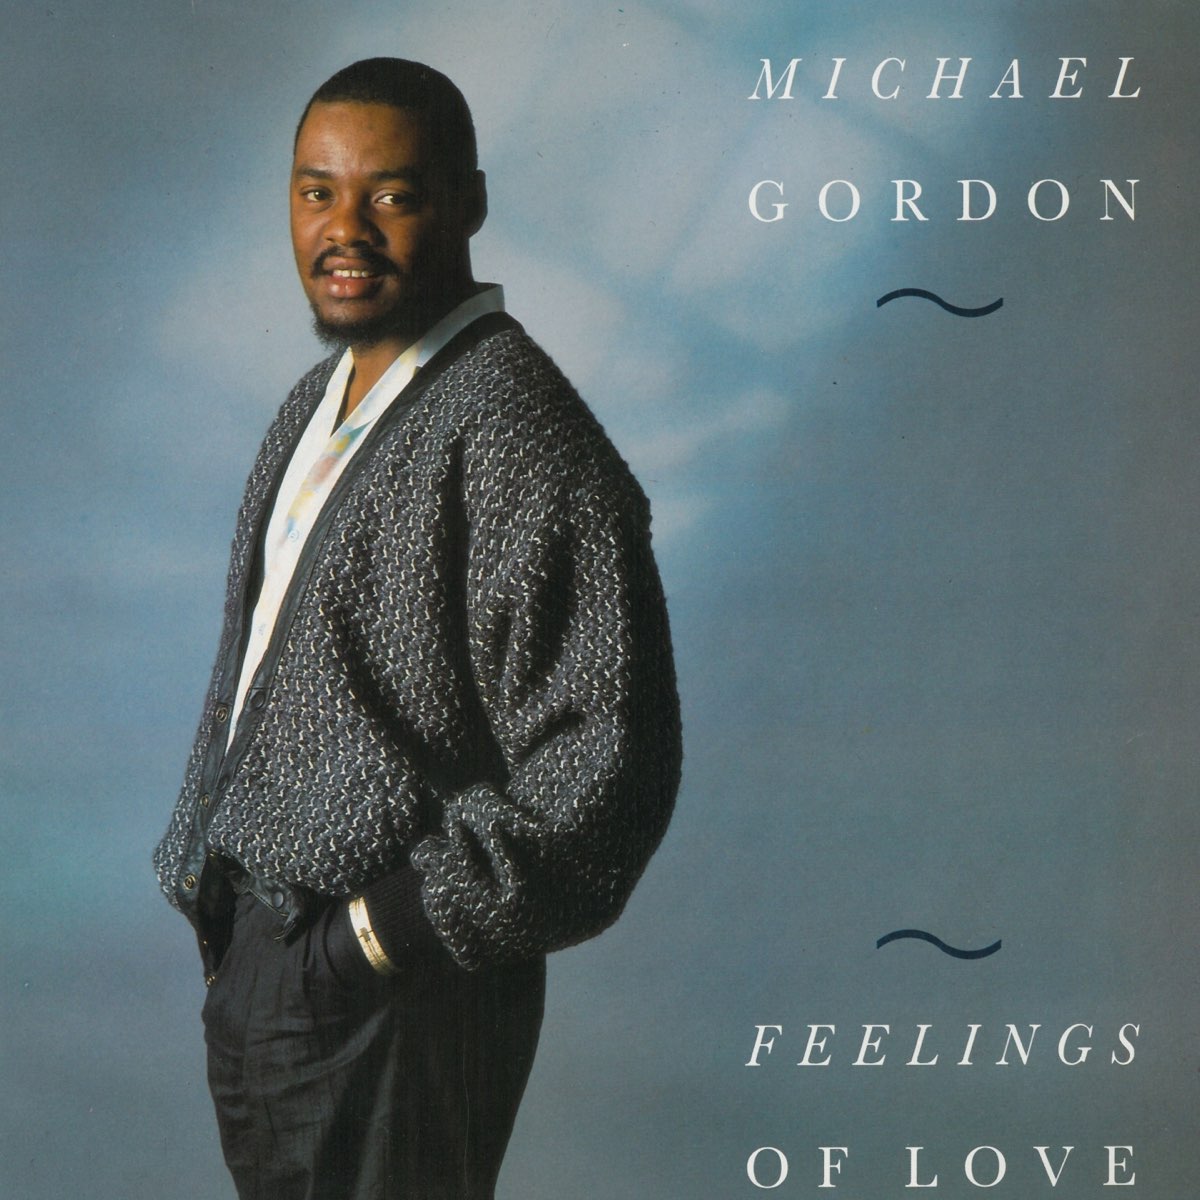 Magic feeling. Michael Gordon. Teddy Pendergrass Greatest Hits.